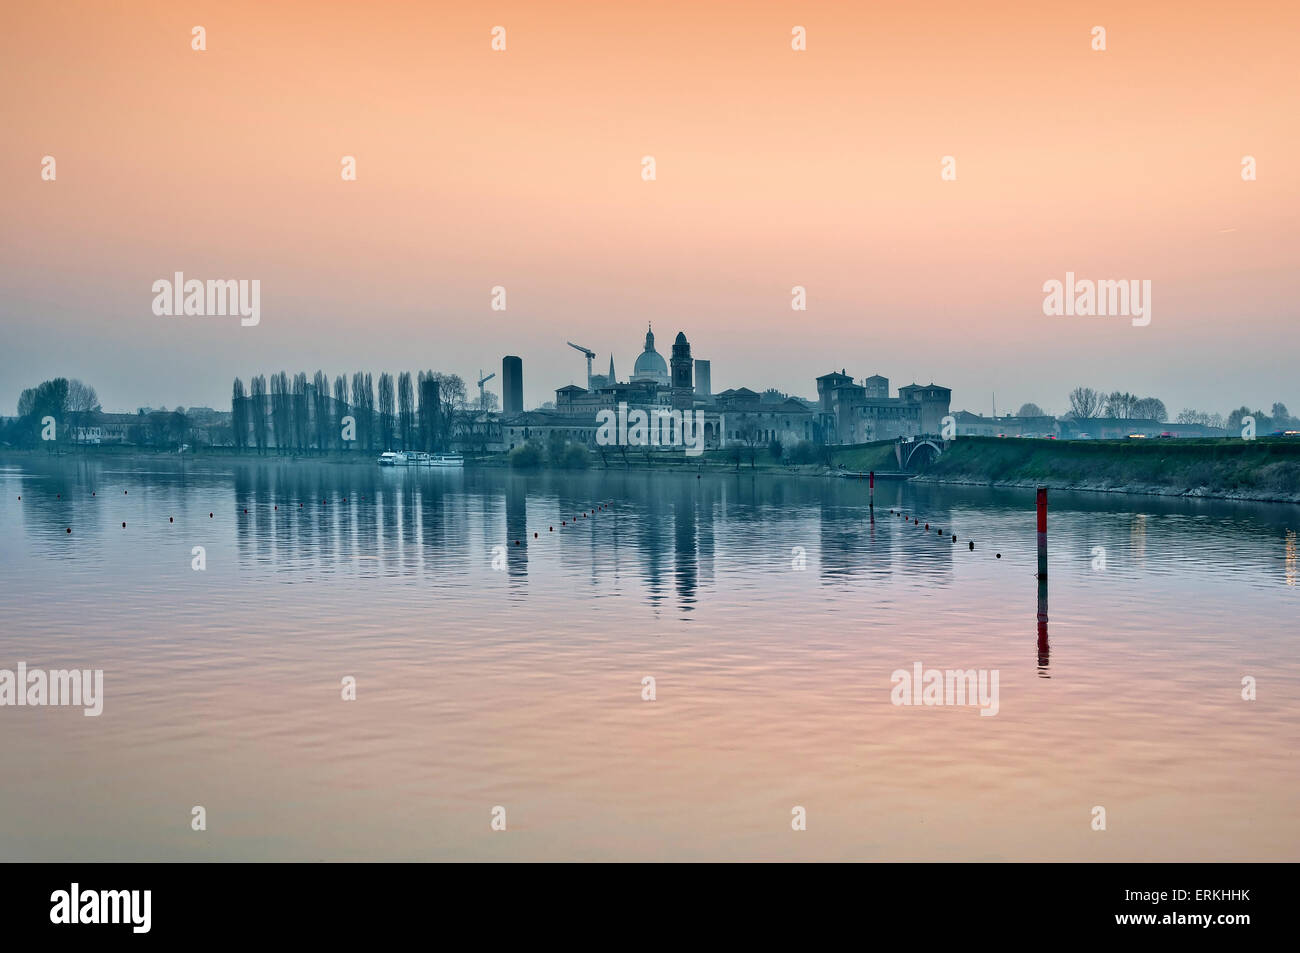 Mantova skyline at dusk reflected on still water lake with landmarks silhouette Stock Photo